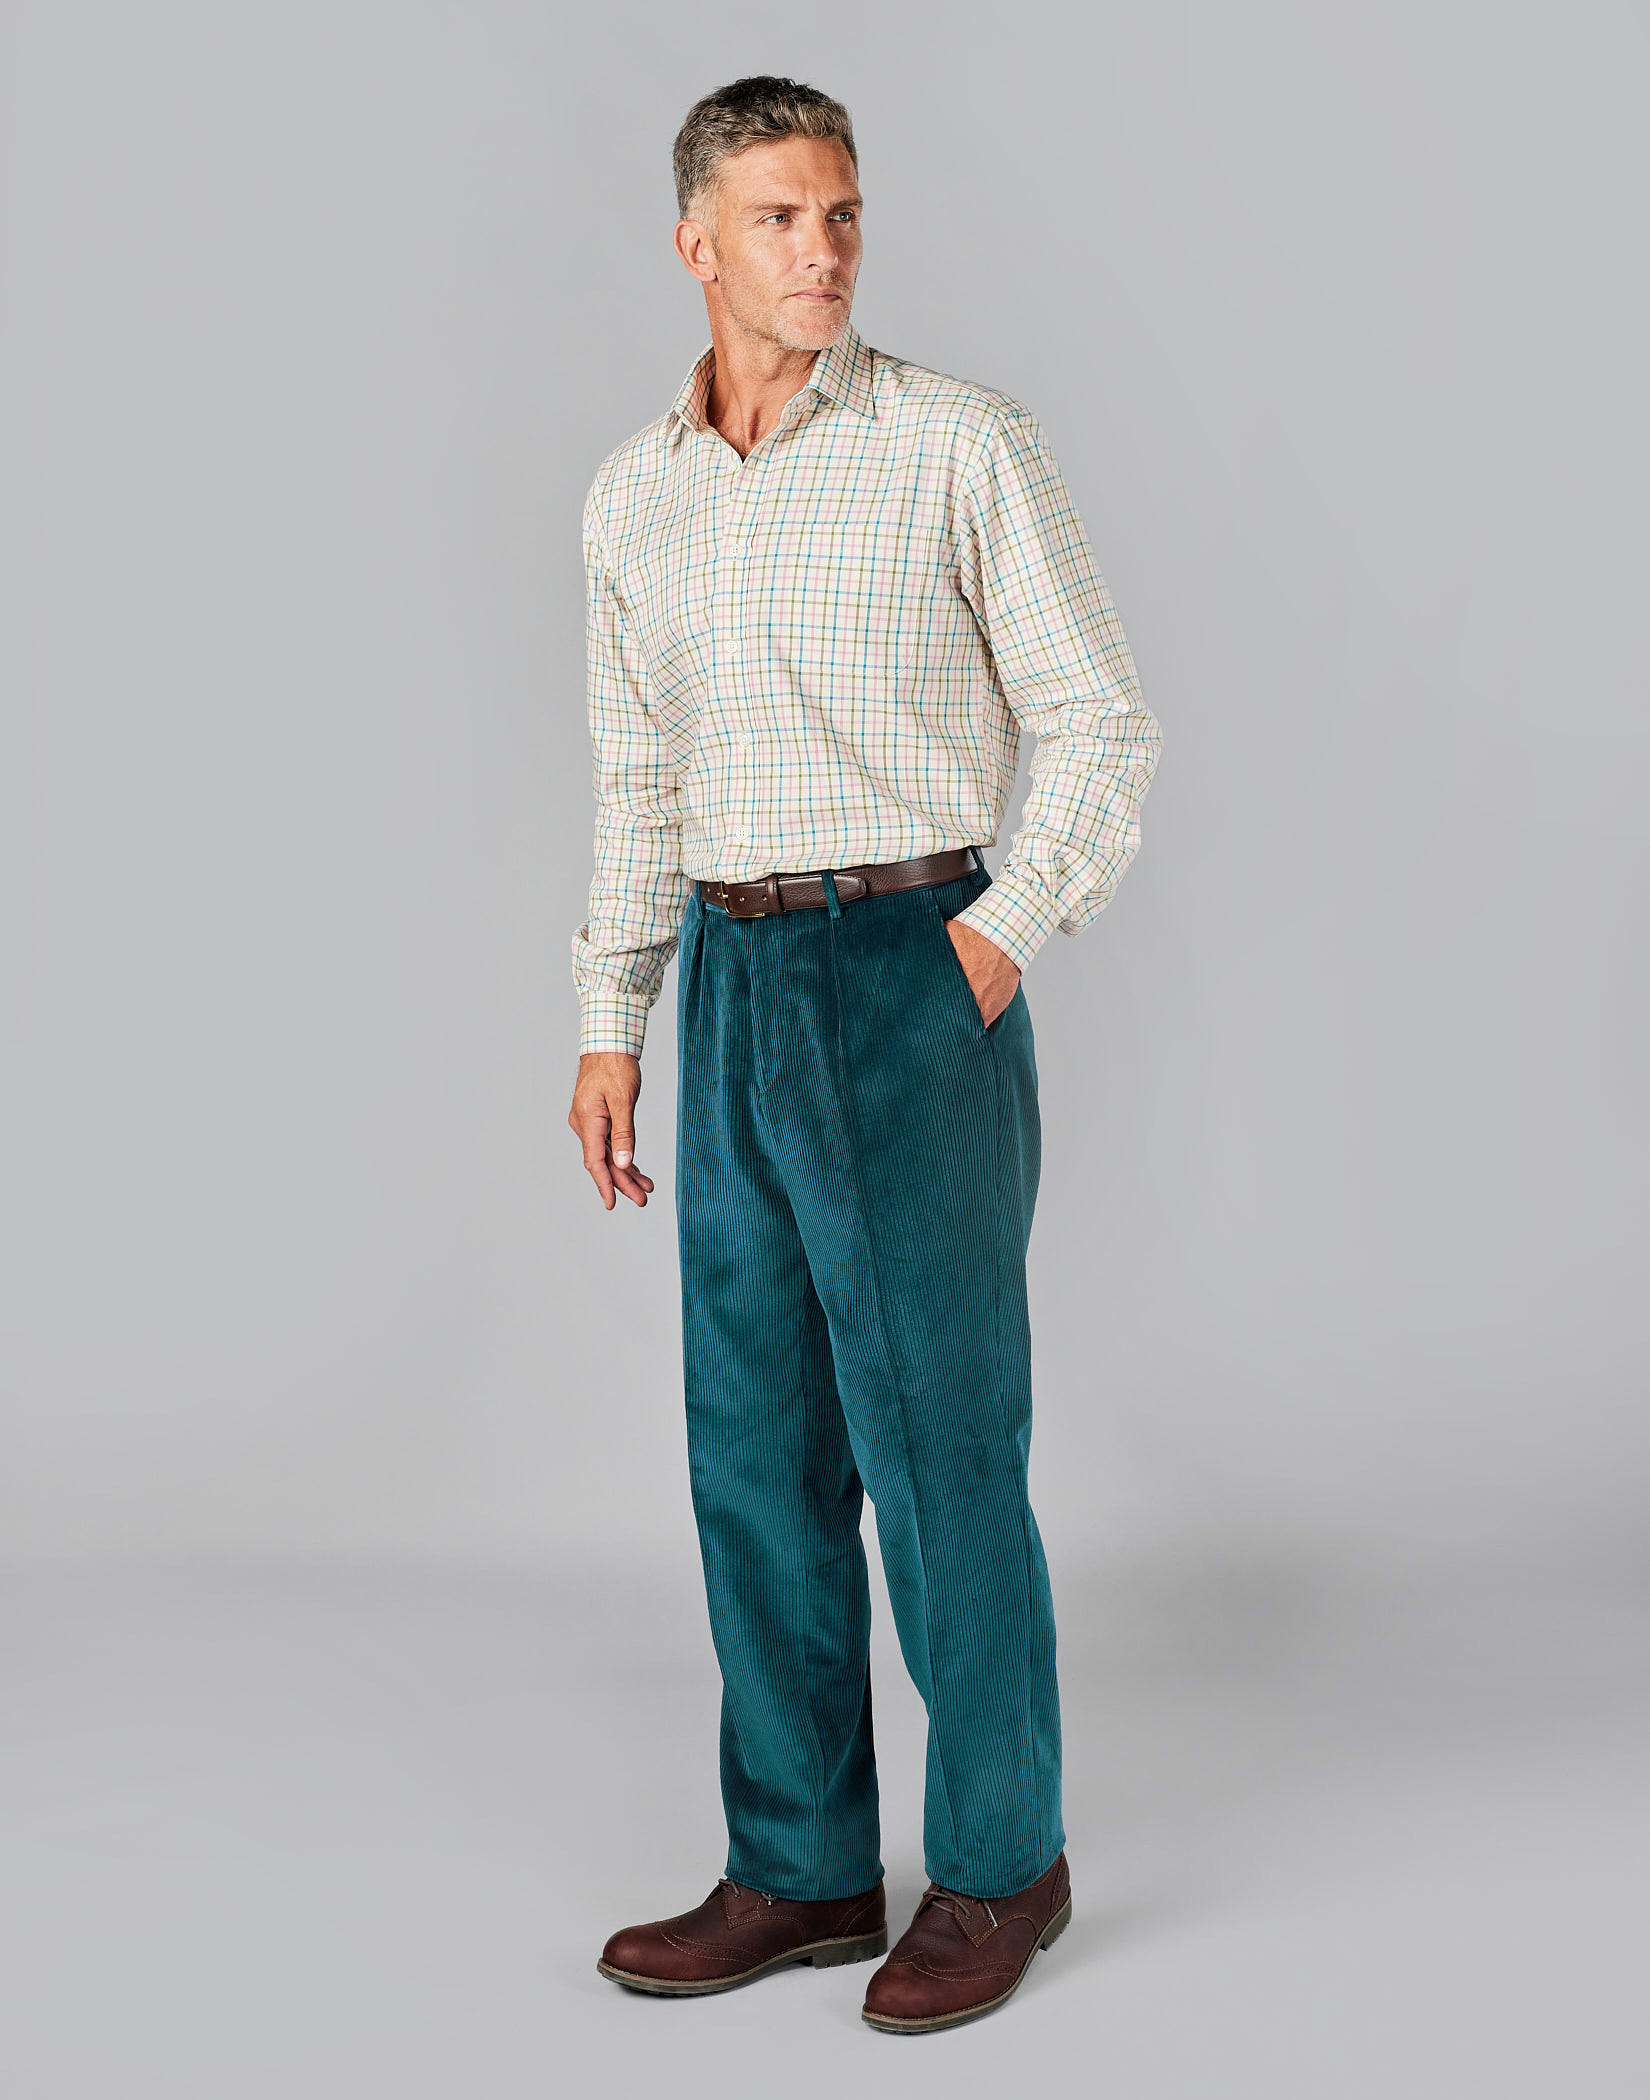 Men Corduroy Pants Outfits-15 Corduroy Men Fashion | Corduroy pants men,  Mens outfits, Corduroy pants outfit